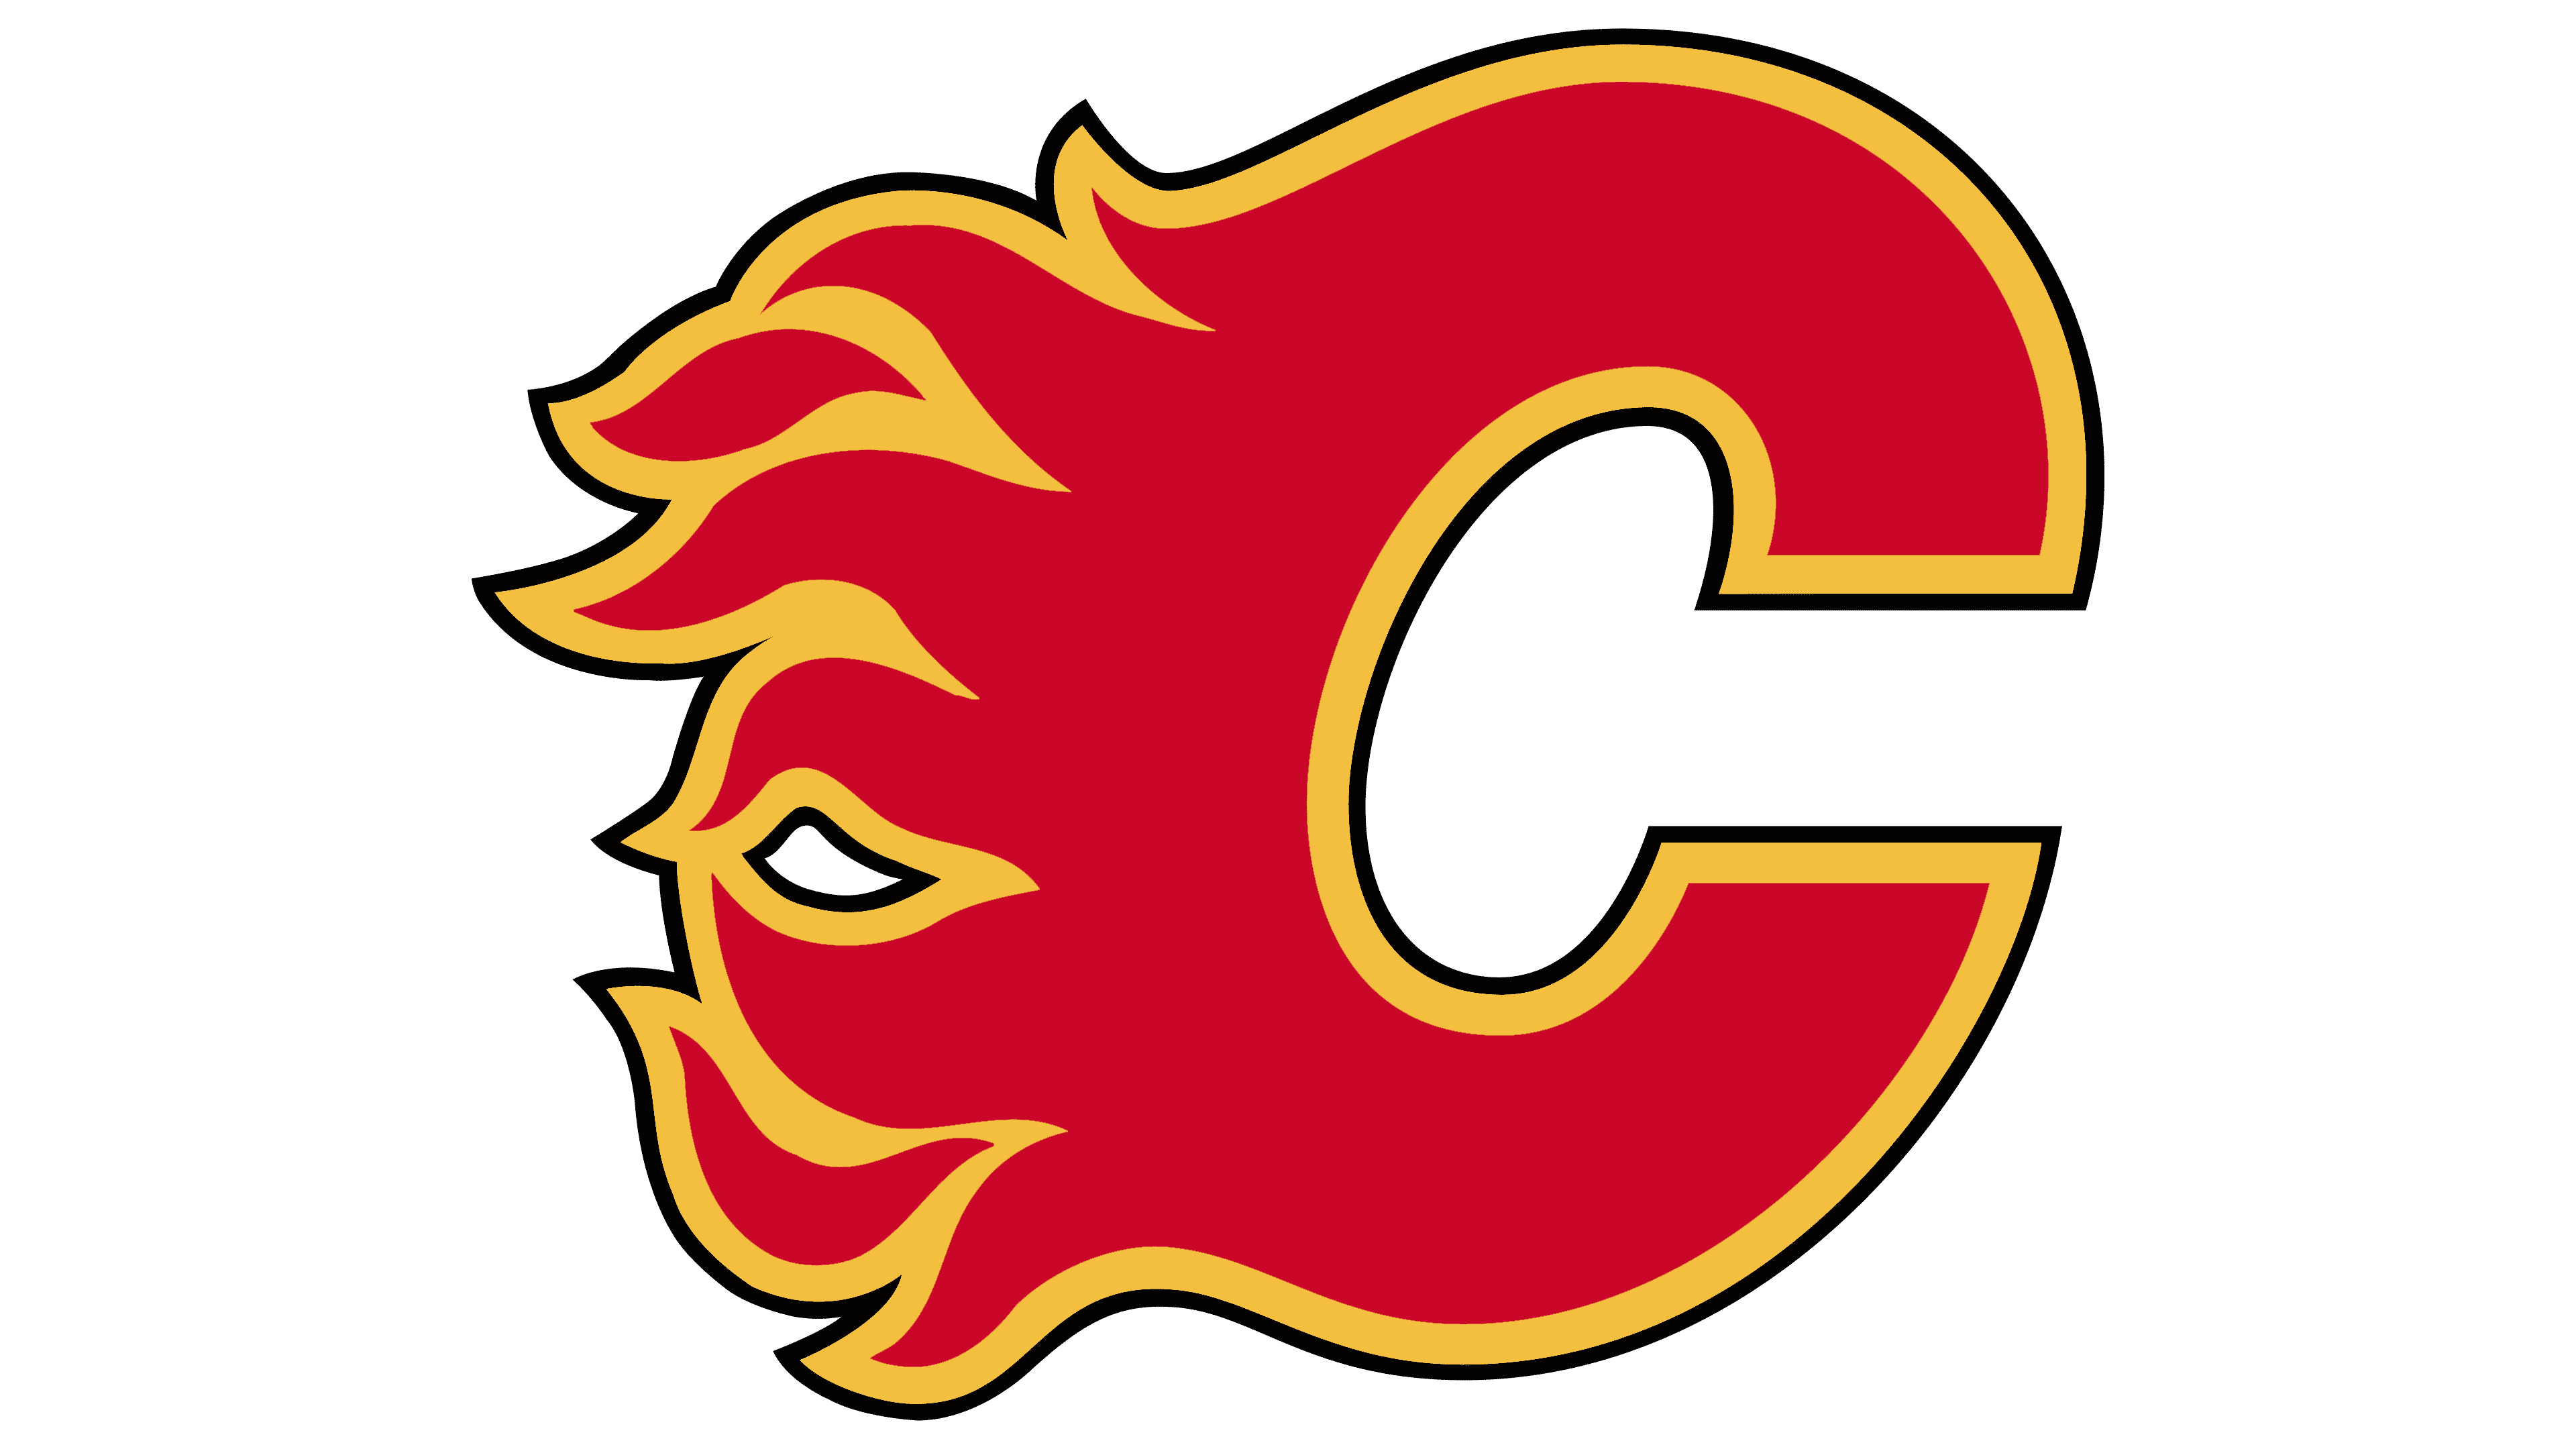 Calgary Flames mhilmiastrip